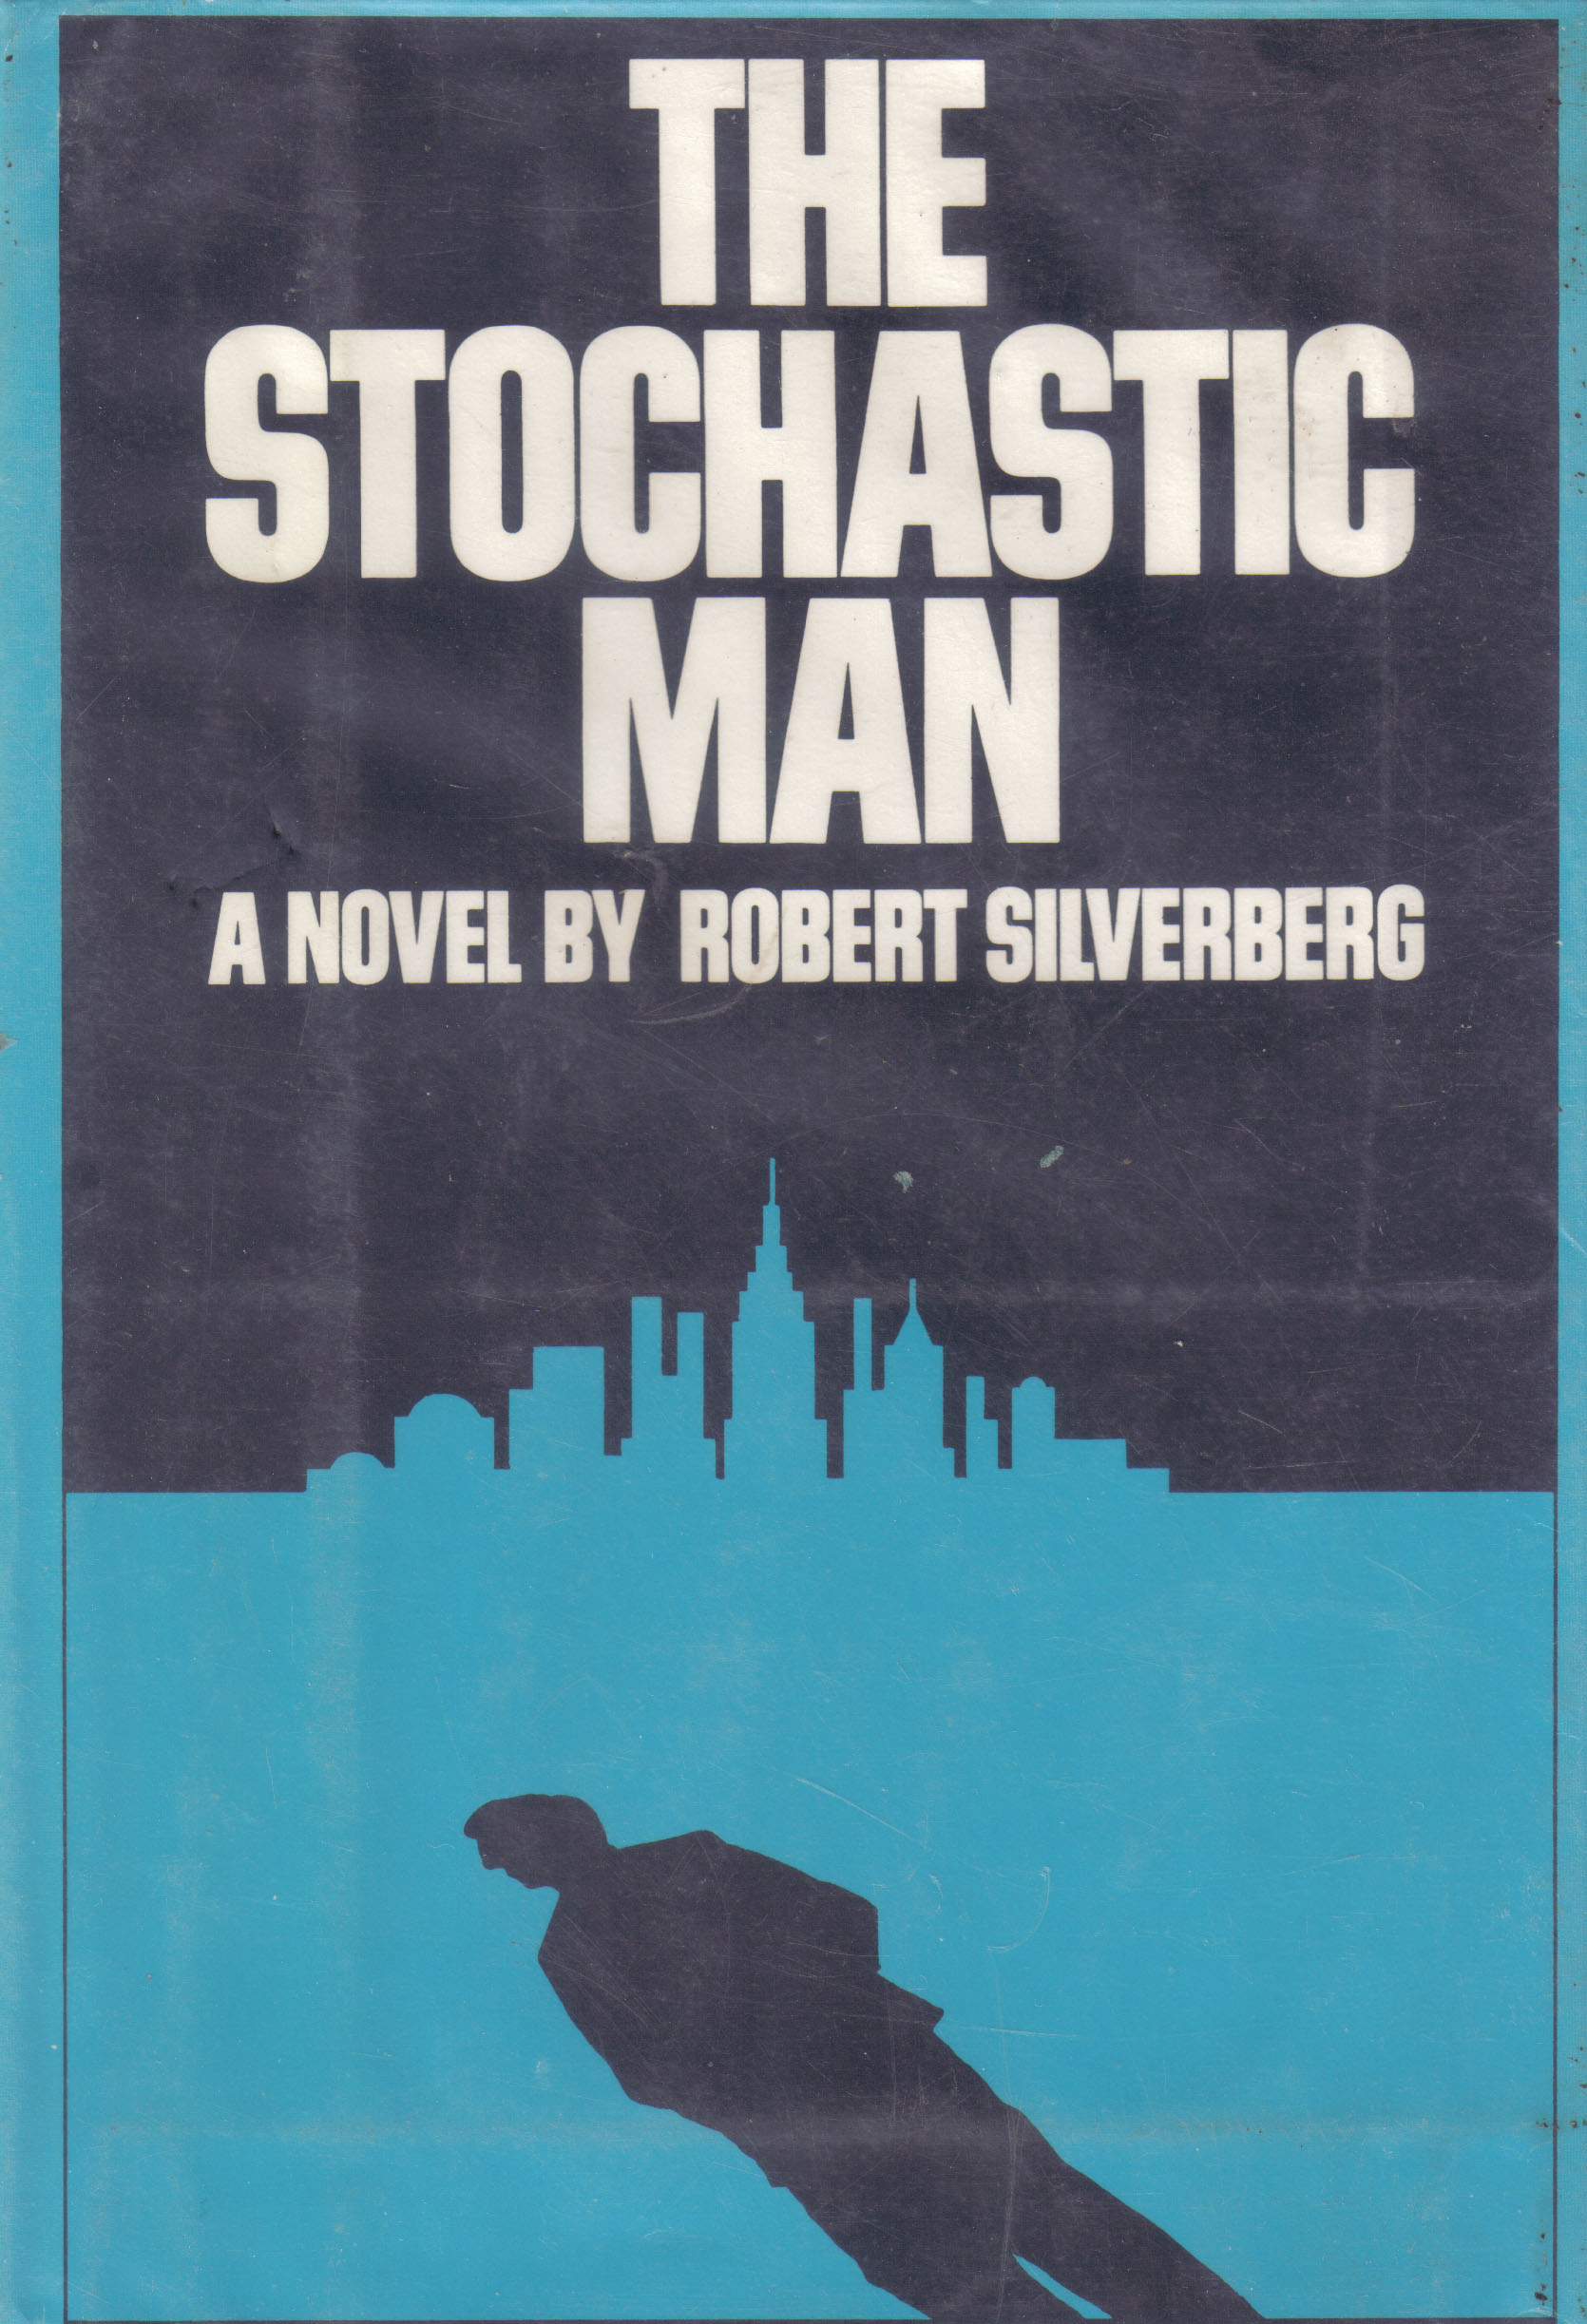 Stochastic man